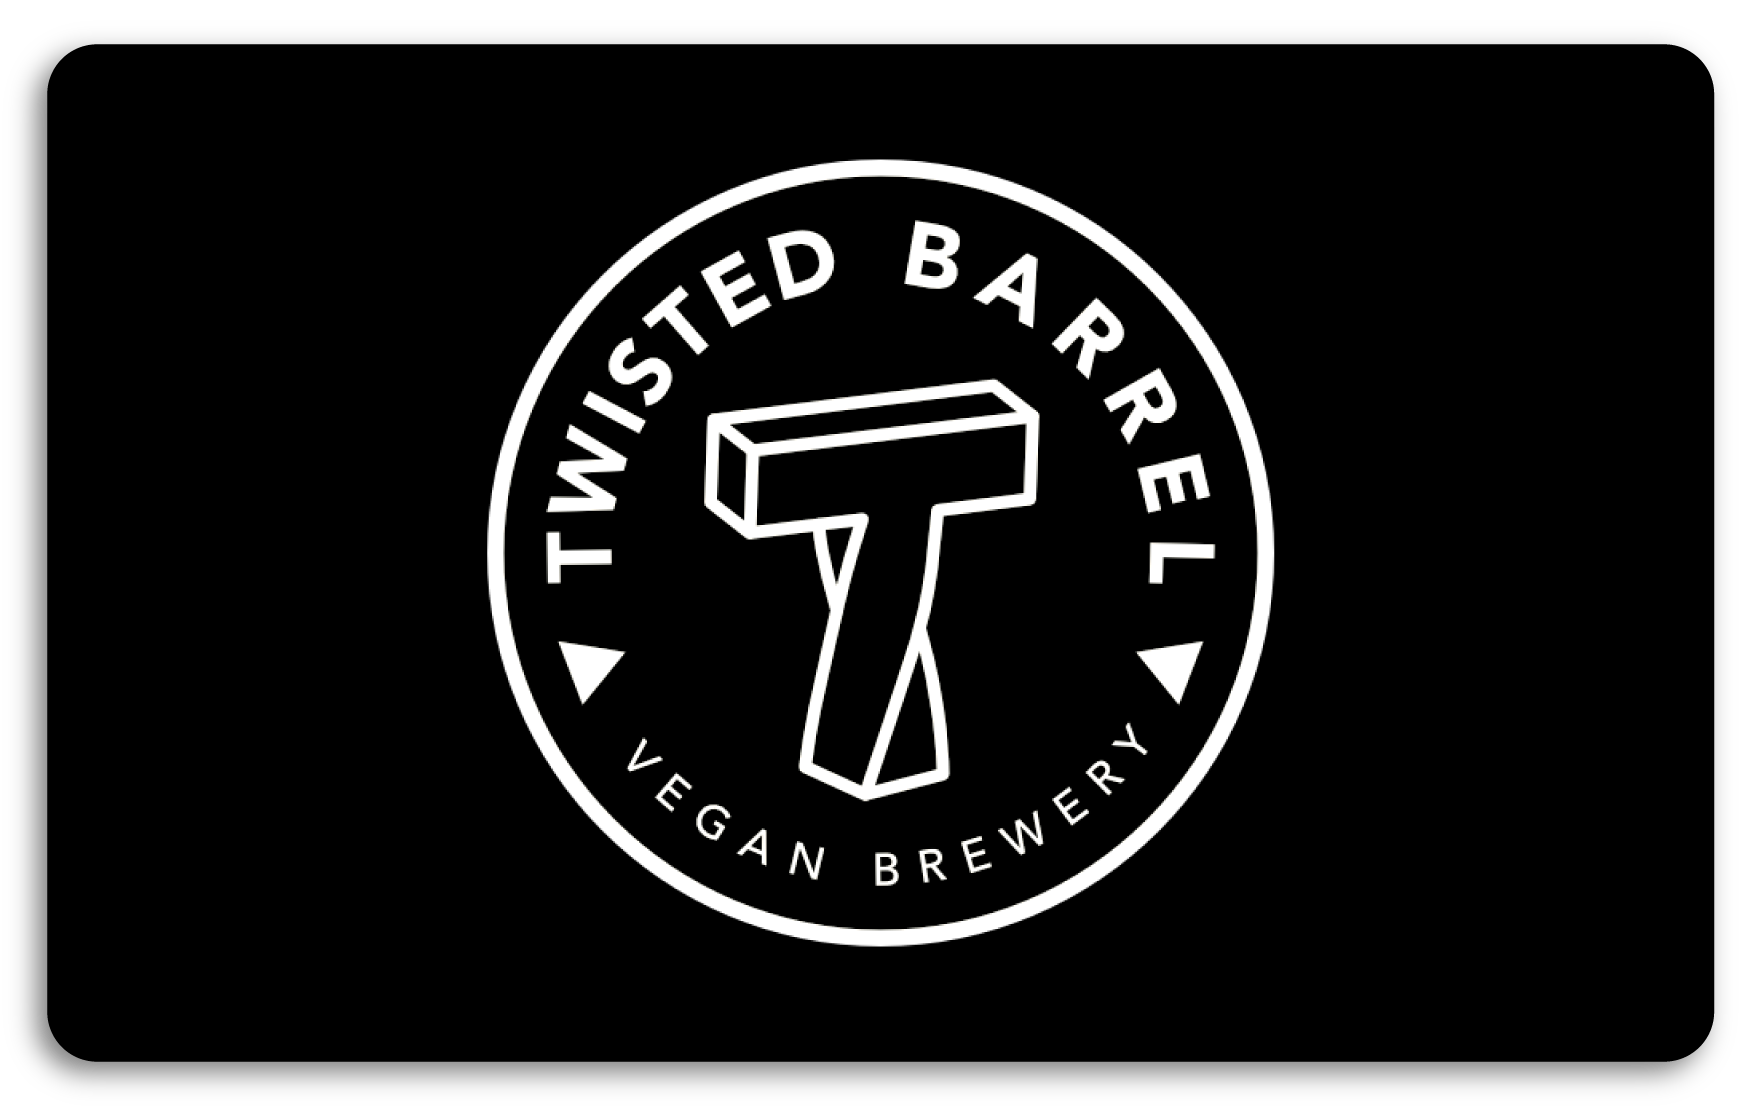 Twisted Barrel Ale